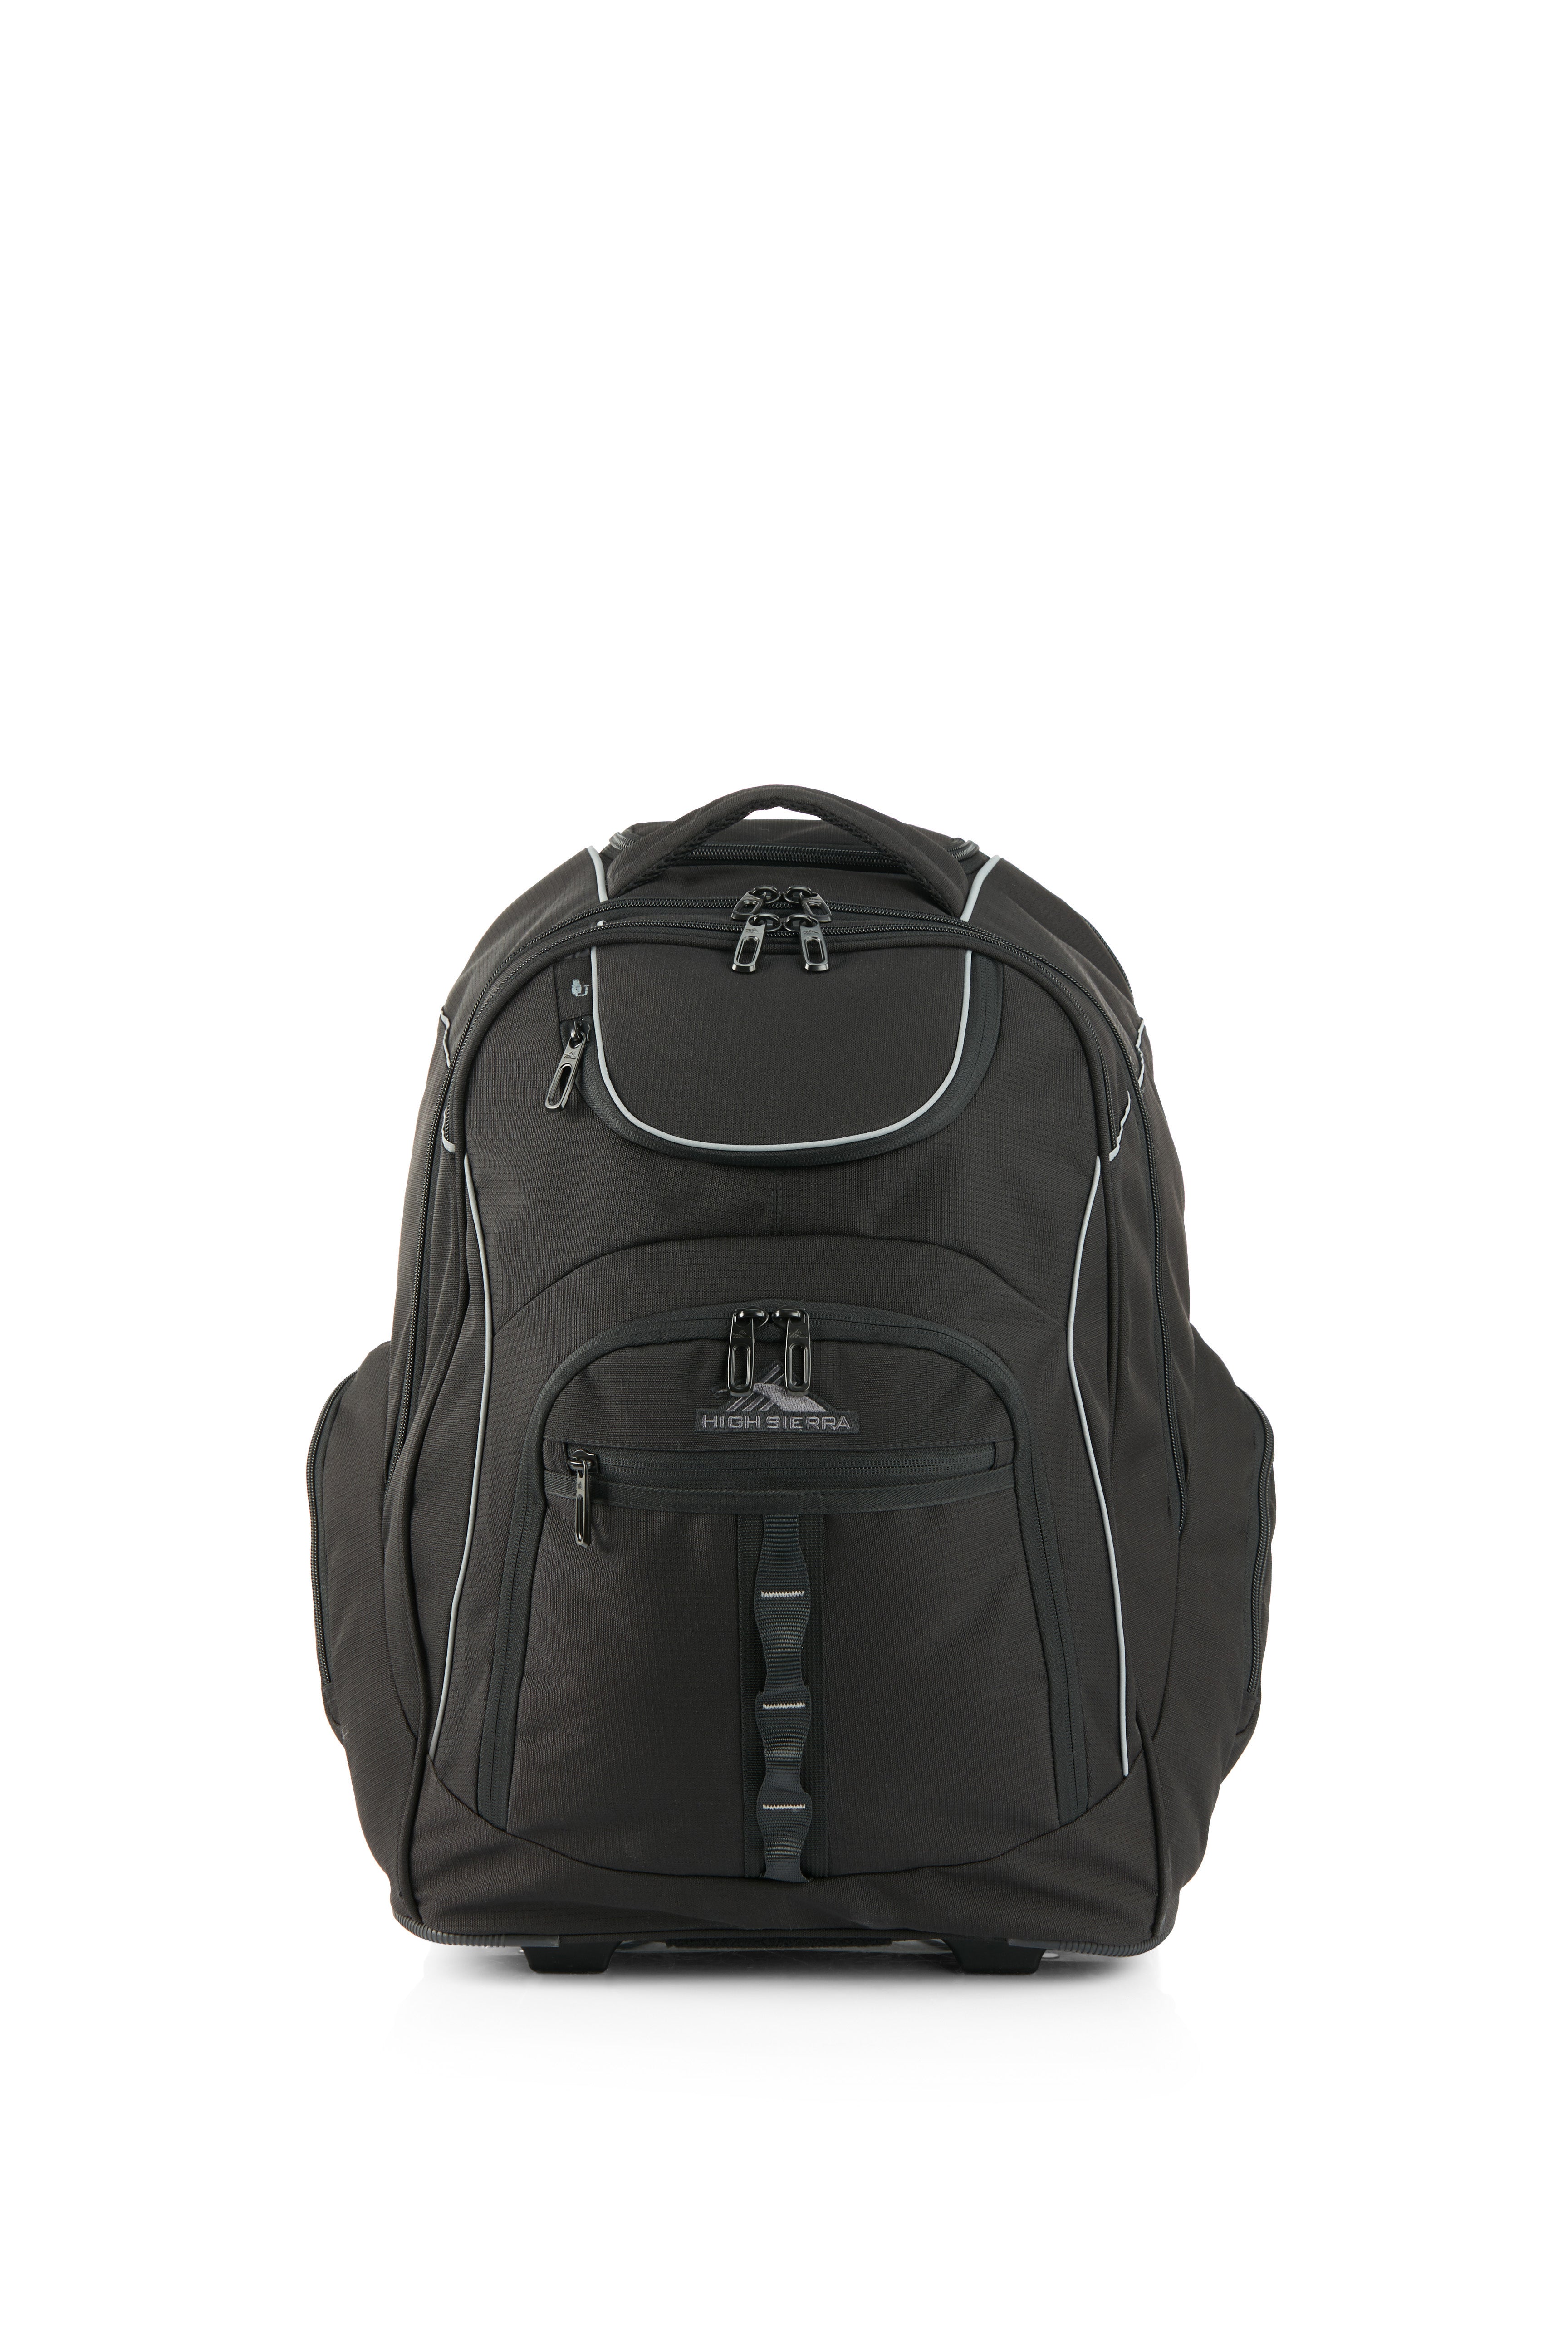 High Sierra - Access 3.0 Eco Pro Wheeled backpack - Black